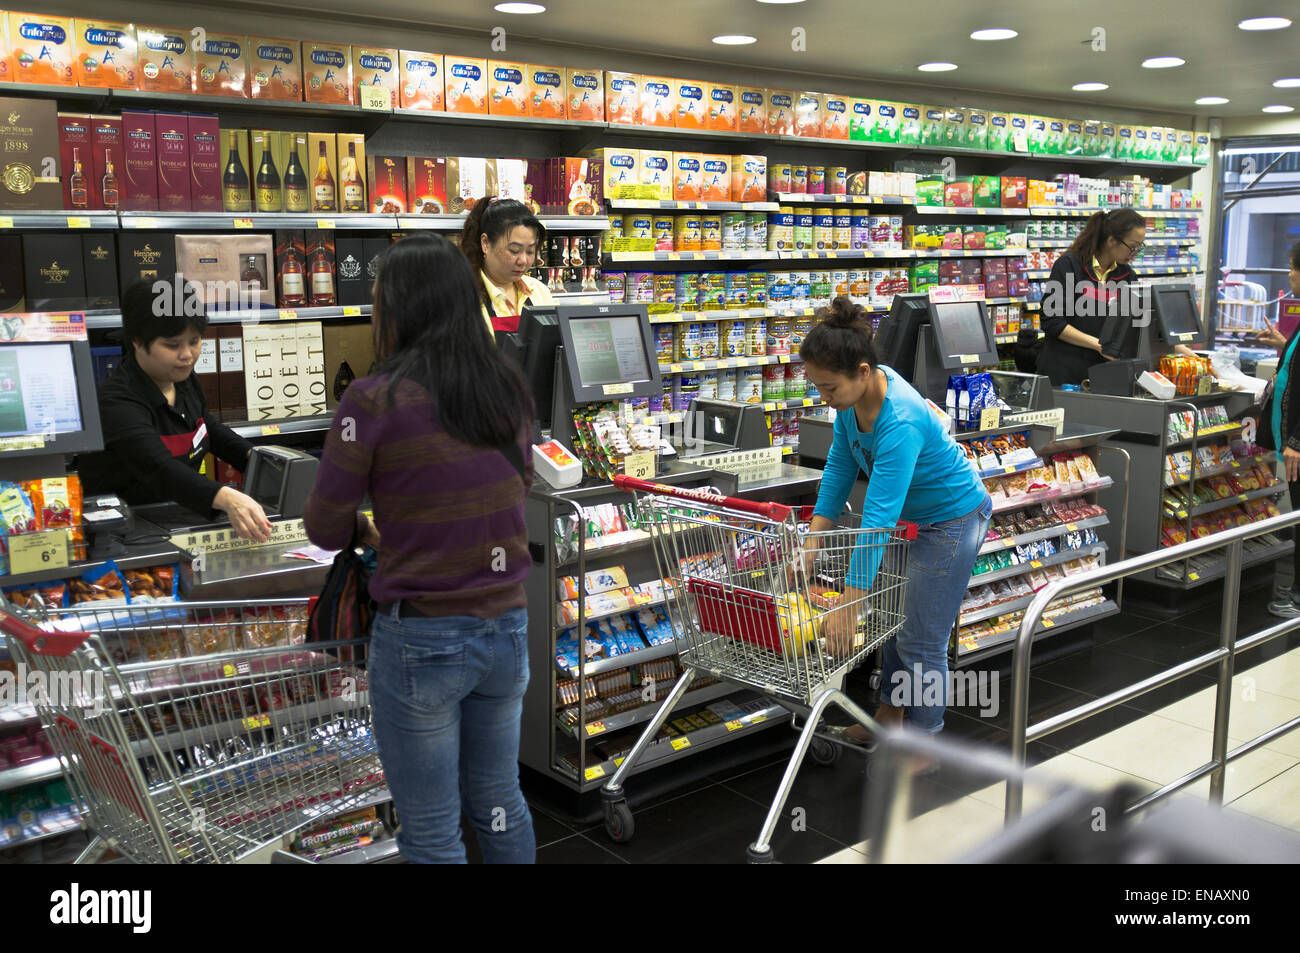 dh Wellcome CAUSEWAY BAY HONG KONG Chinese Customers supermarket checkout china super market Stock Photo